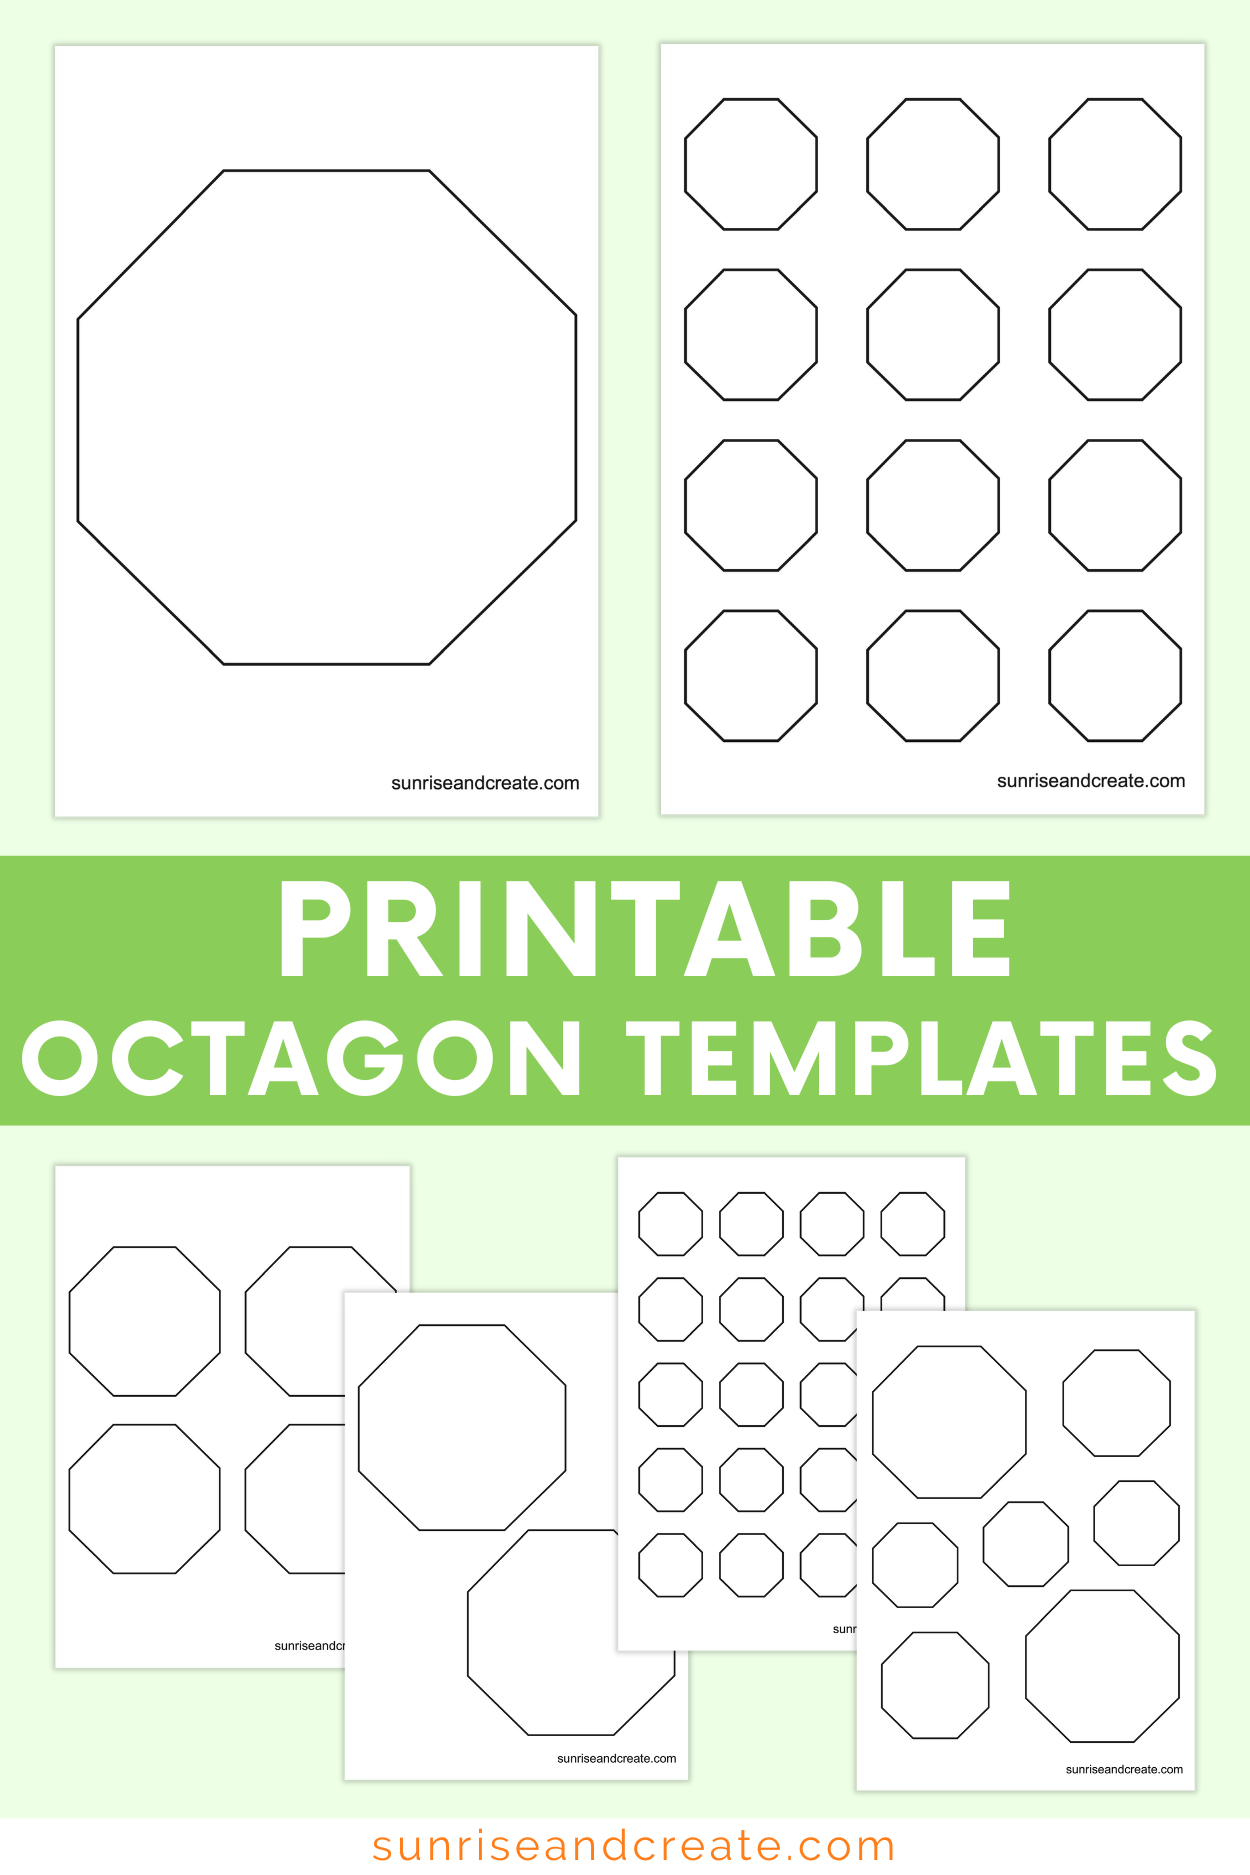 Free Printable Octagon Templates Sunrise and Create